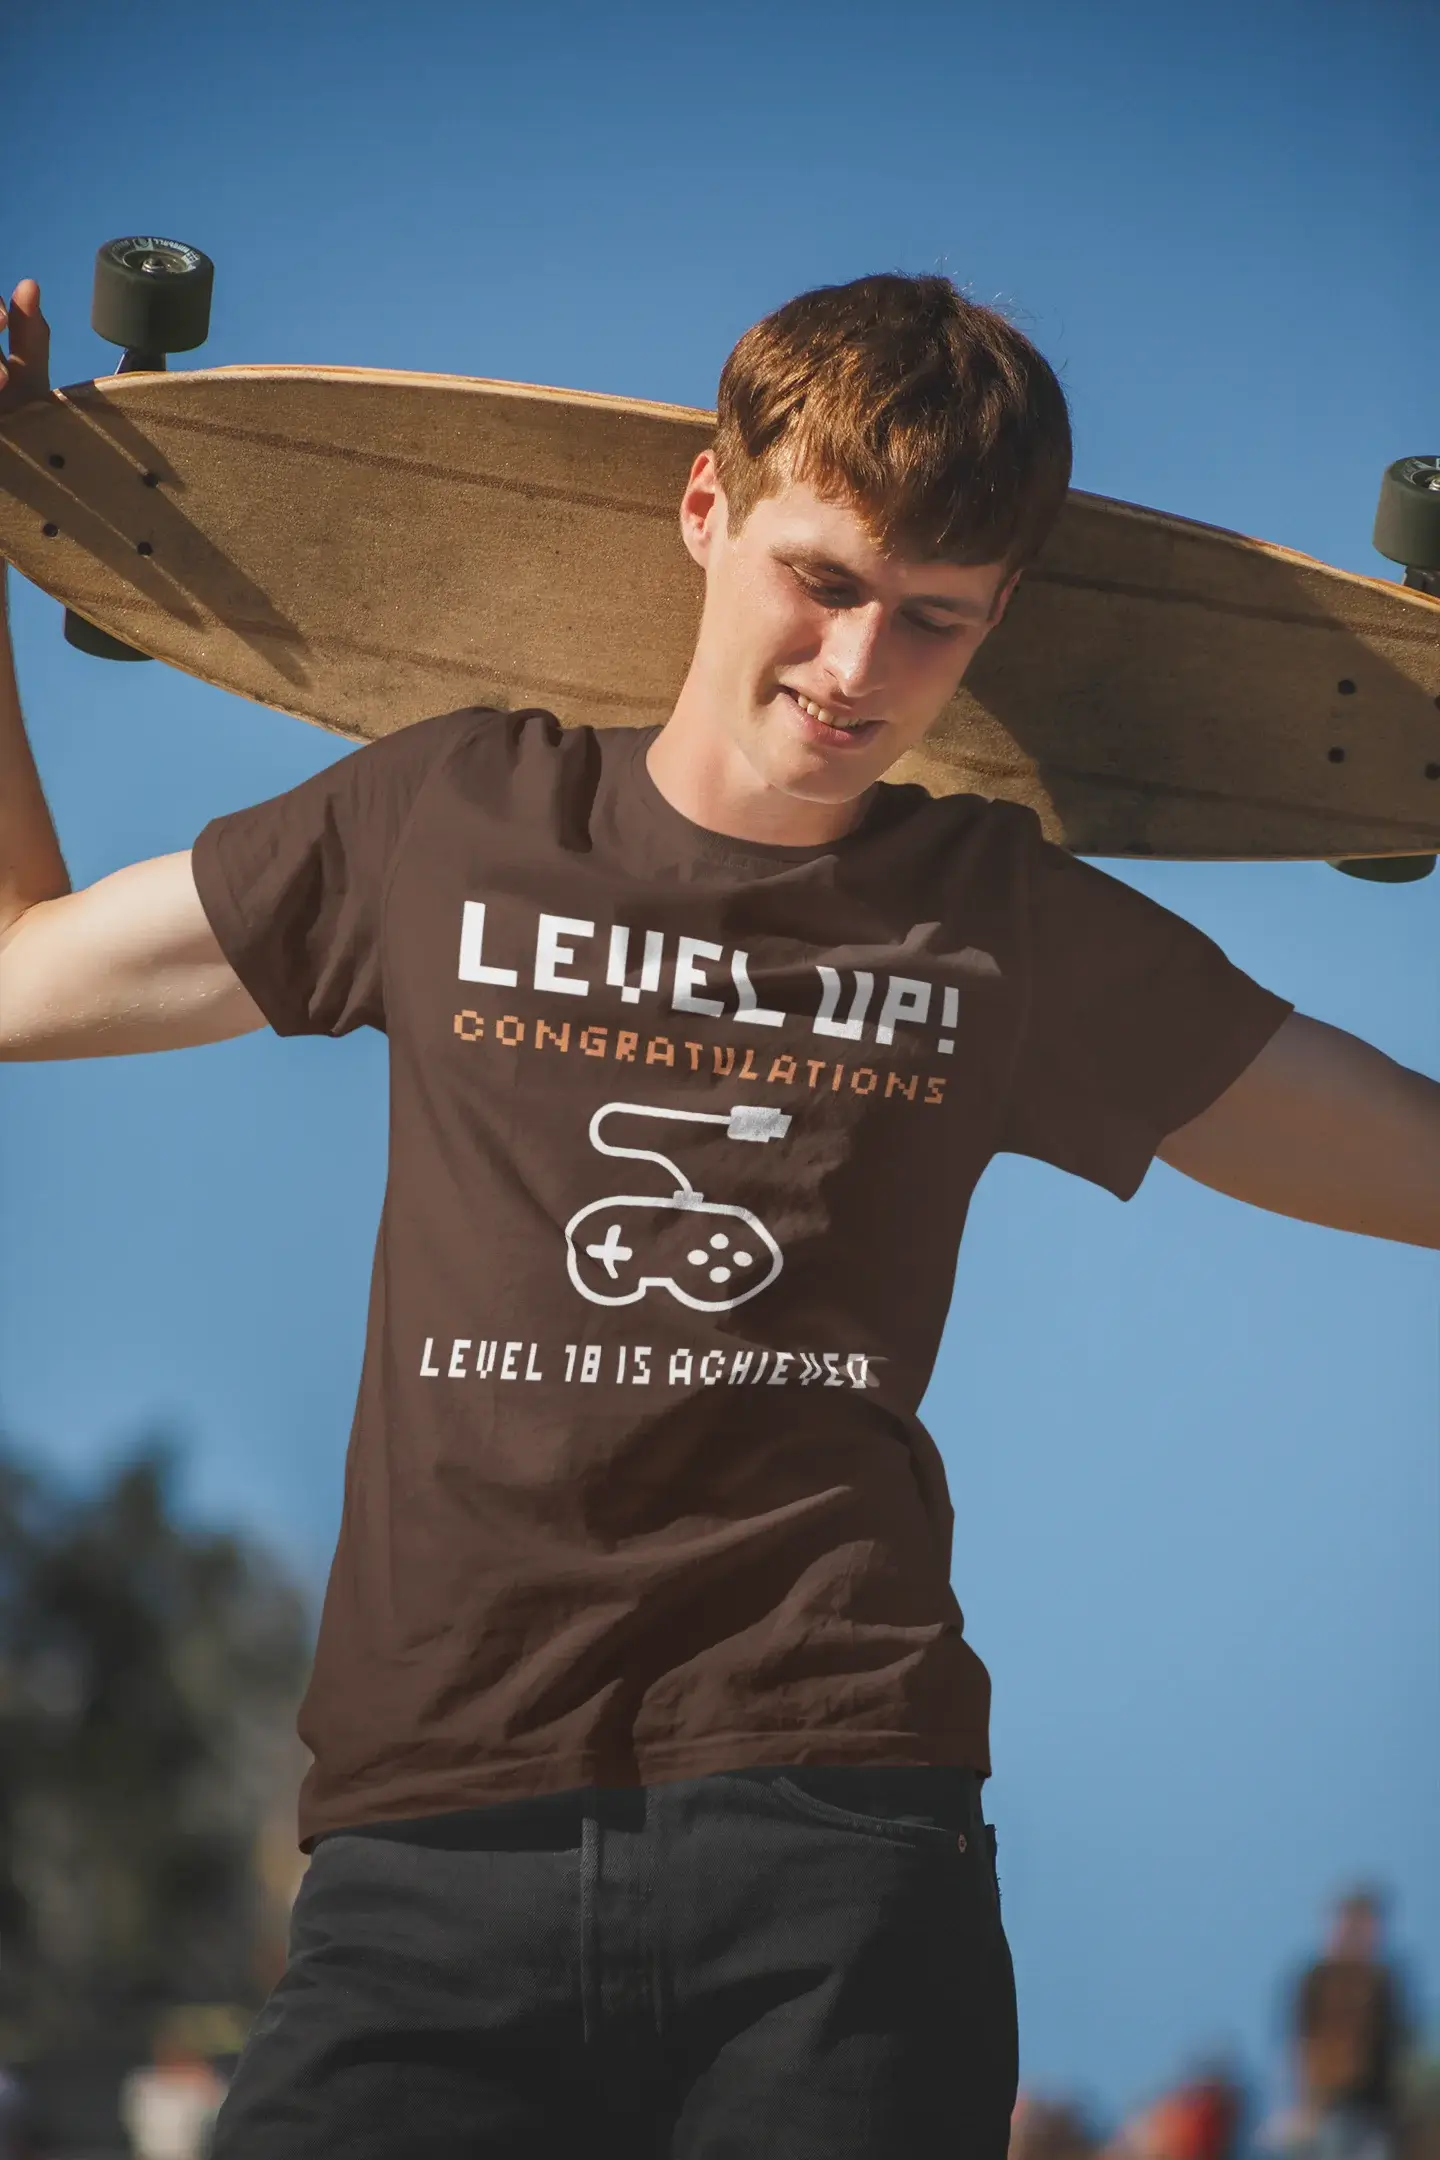 Men's Graphic T-Shirt Level Up! Level Achieved Gift Idea